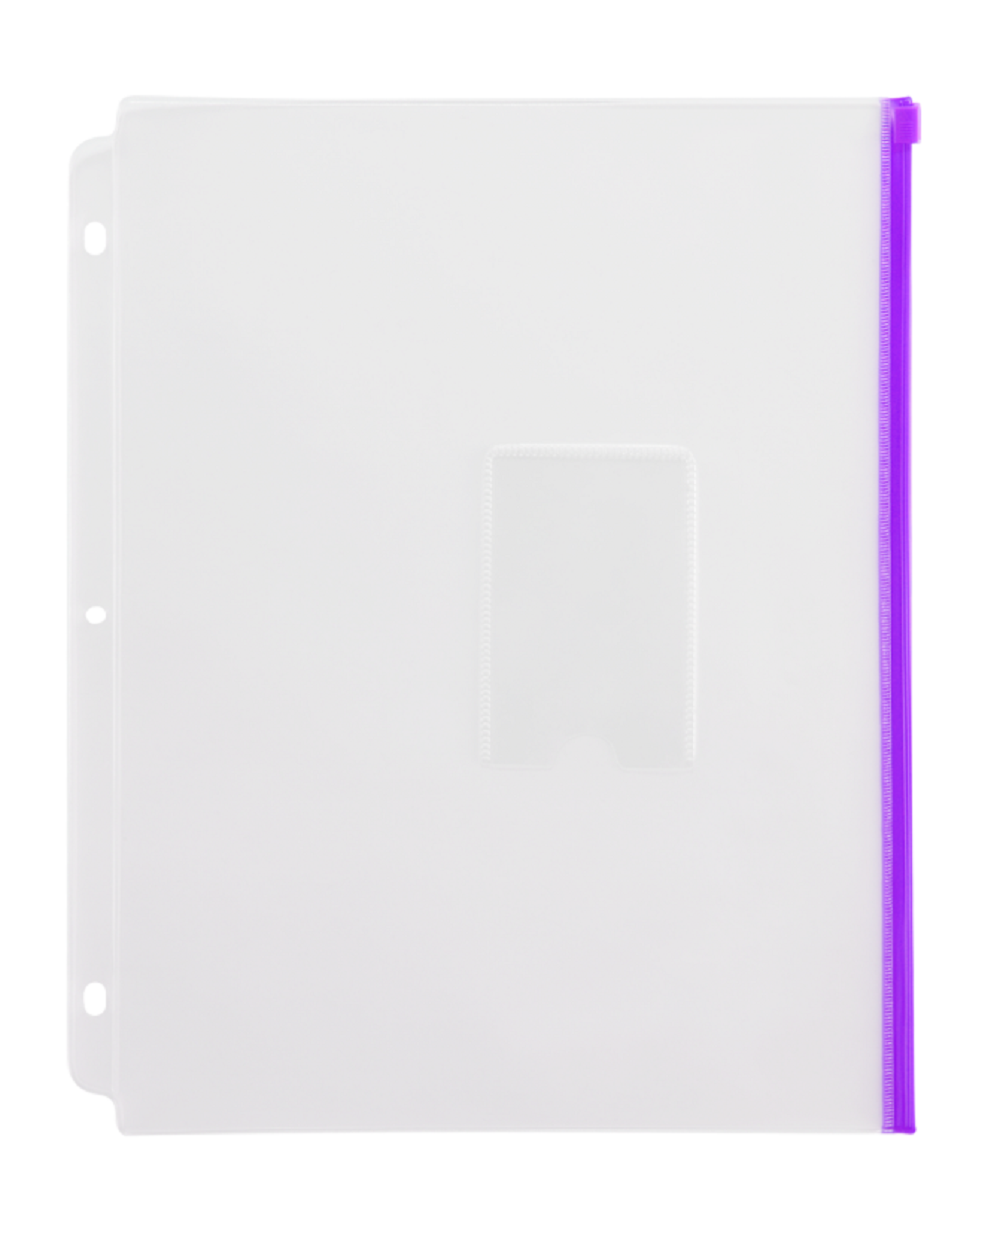 3 Holes Clear Zipper Binder Pocket with Card Slots（1 PCS, Purple Zipper)